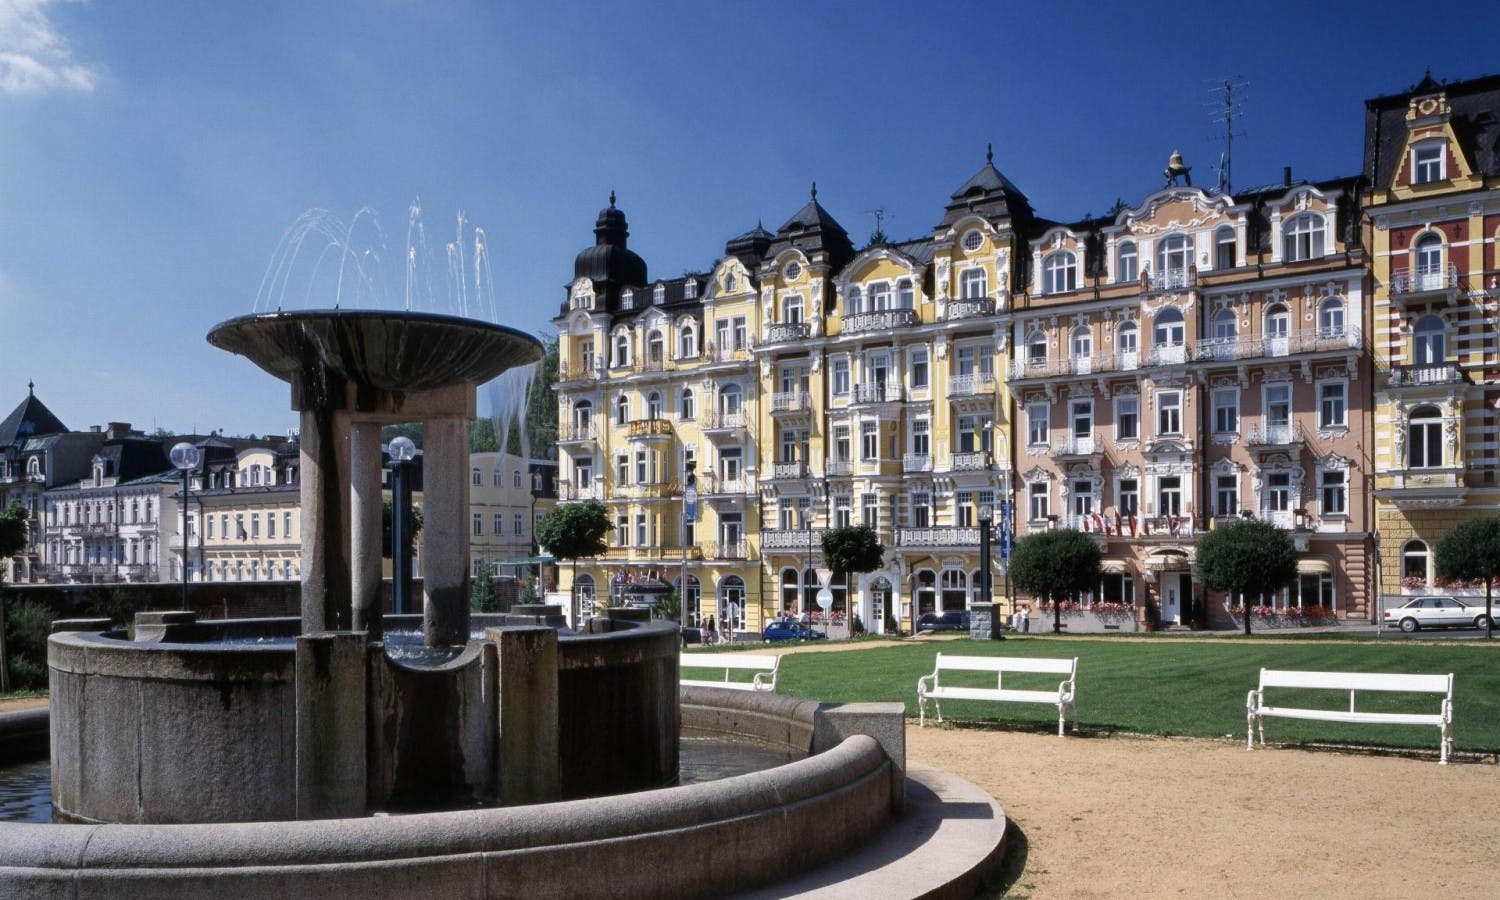 Karlovy Vary and Marianske Spa day trip from Prague